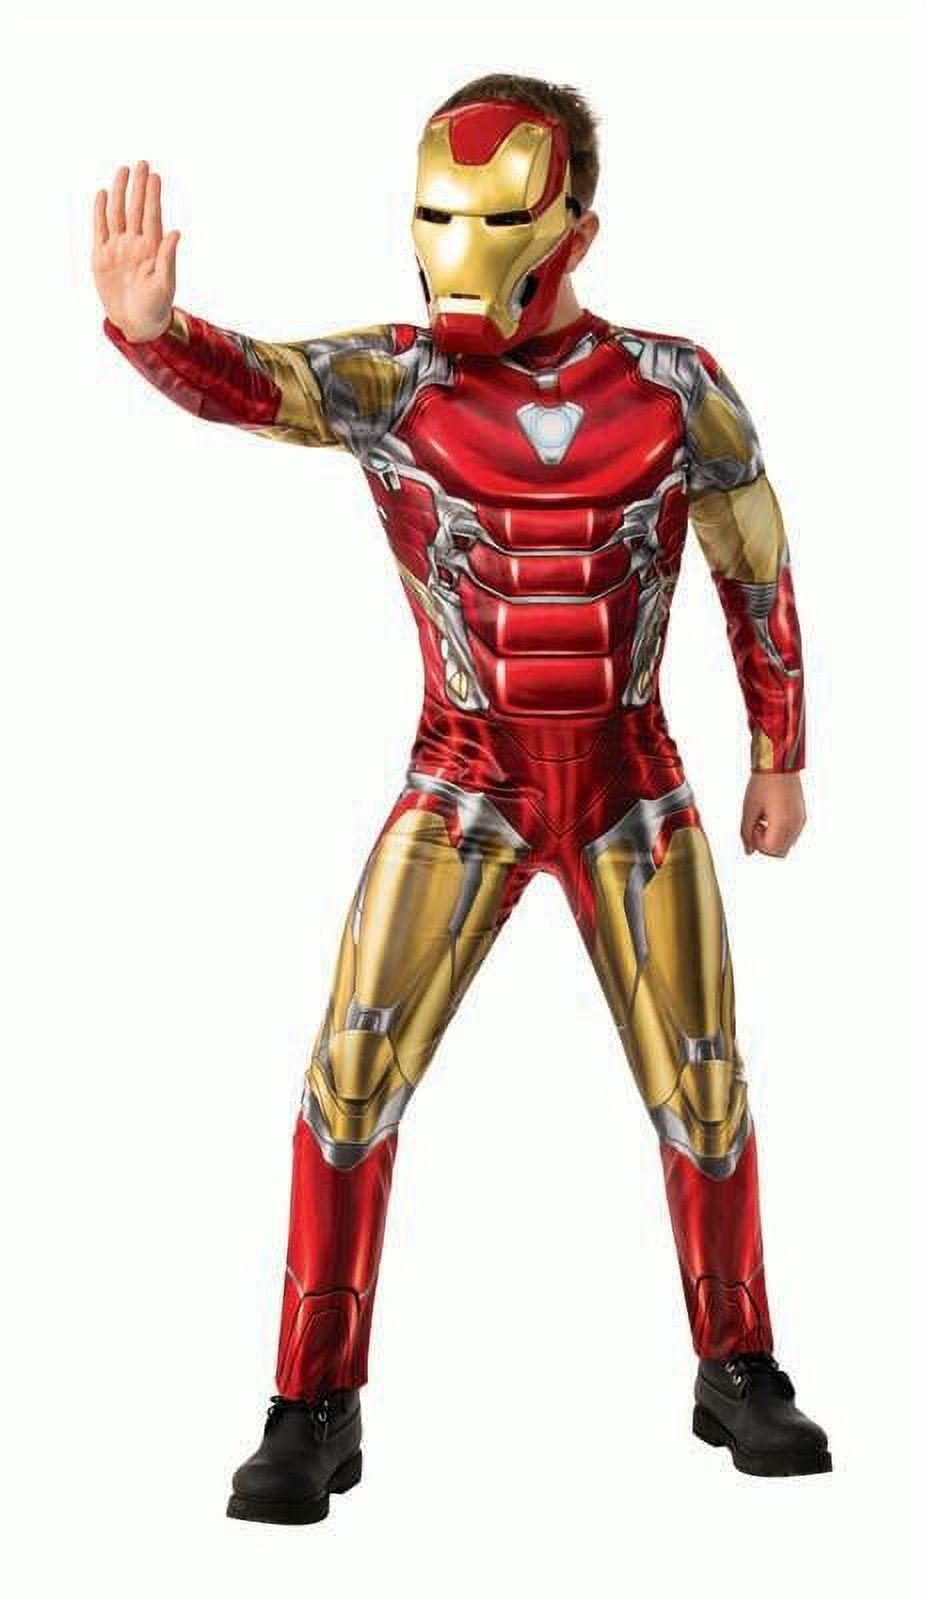 Child Officially Licensed Boys Marvel Iron Man Halloween Costume Medium, Red - image 1 of 6